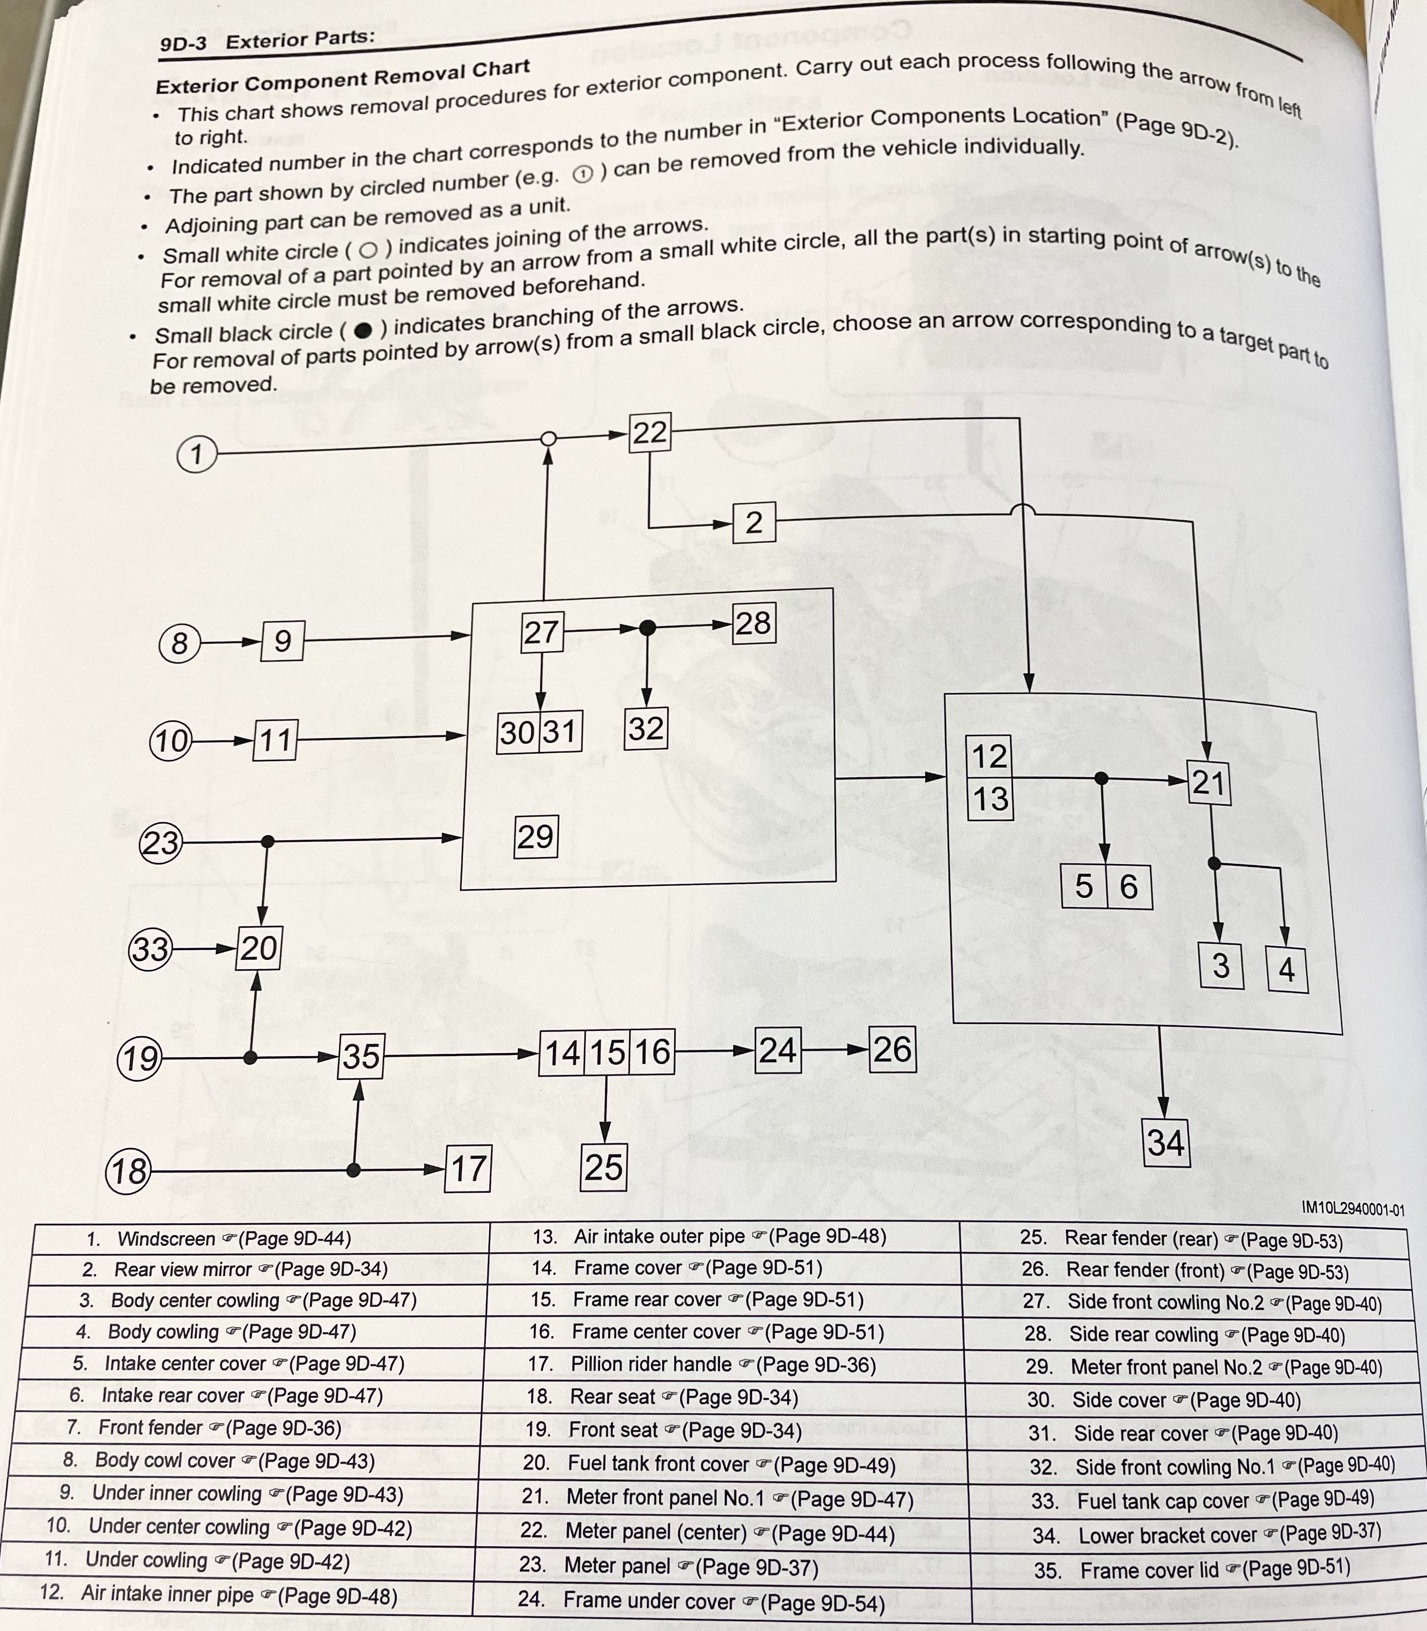 Manual - external parts removal chart.jpeg